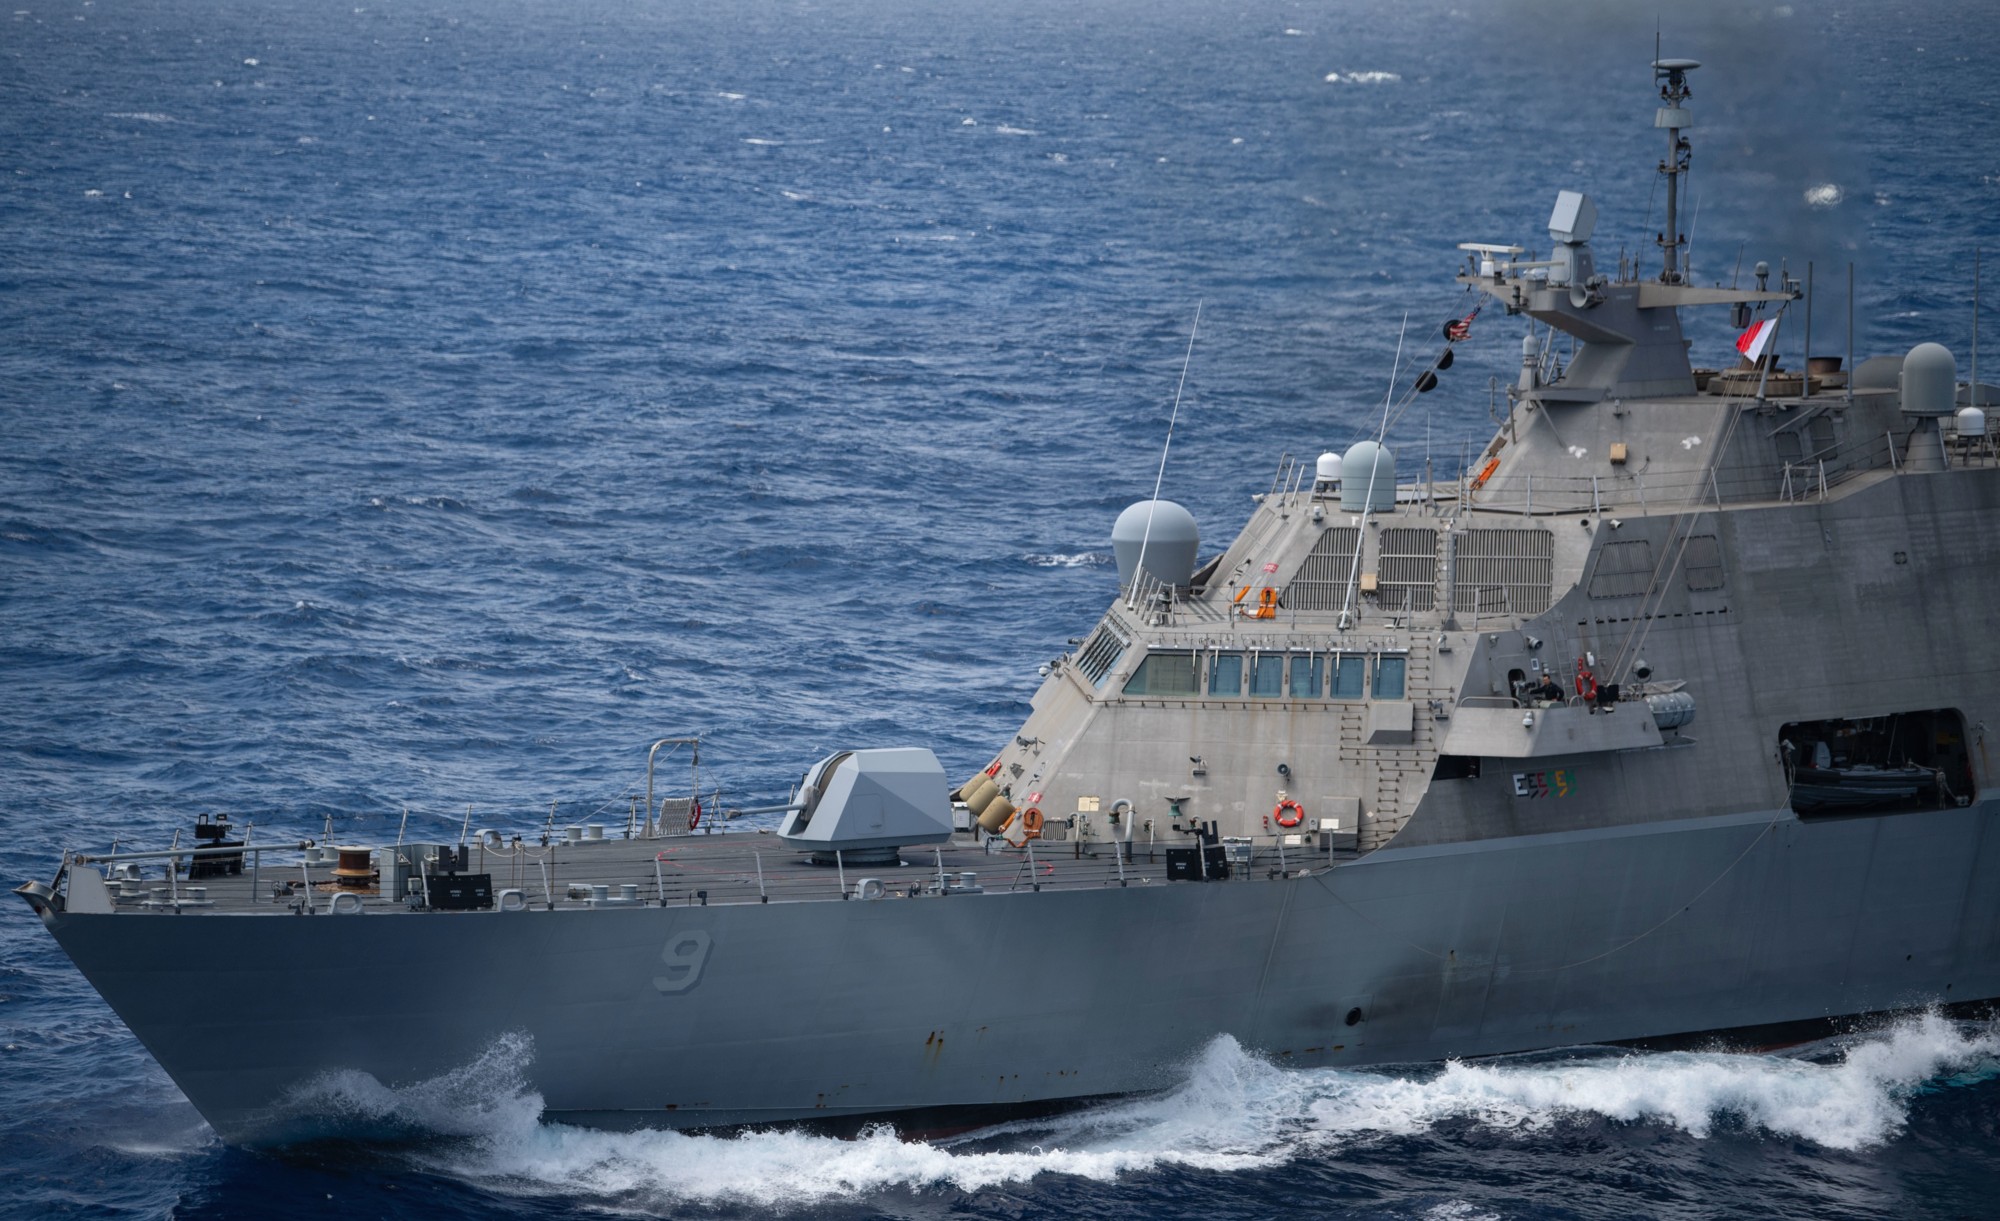 lcs-9 uss little rock freedom class littoral combat ship us navy 40